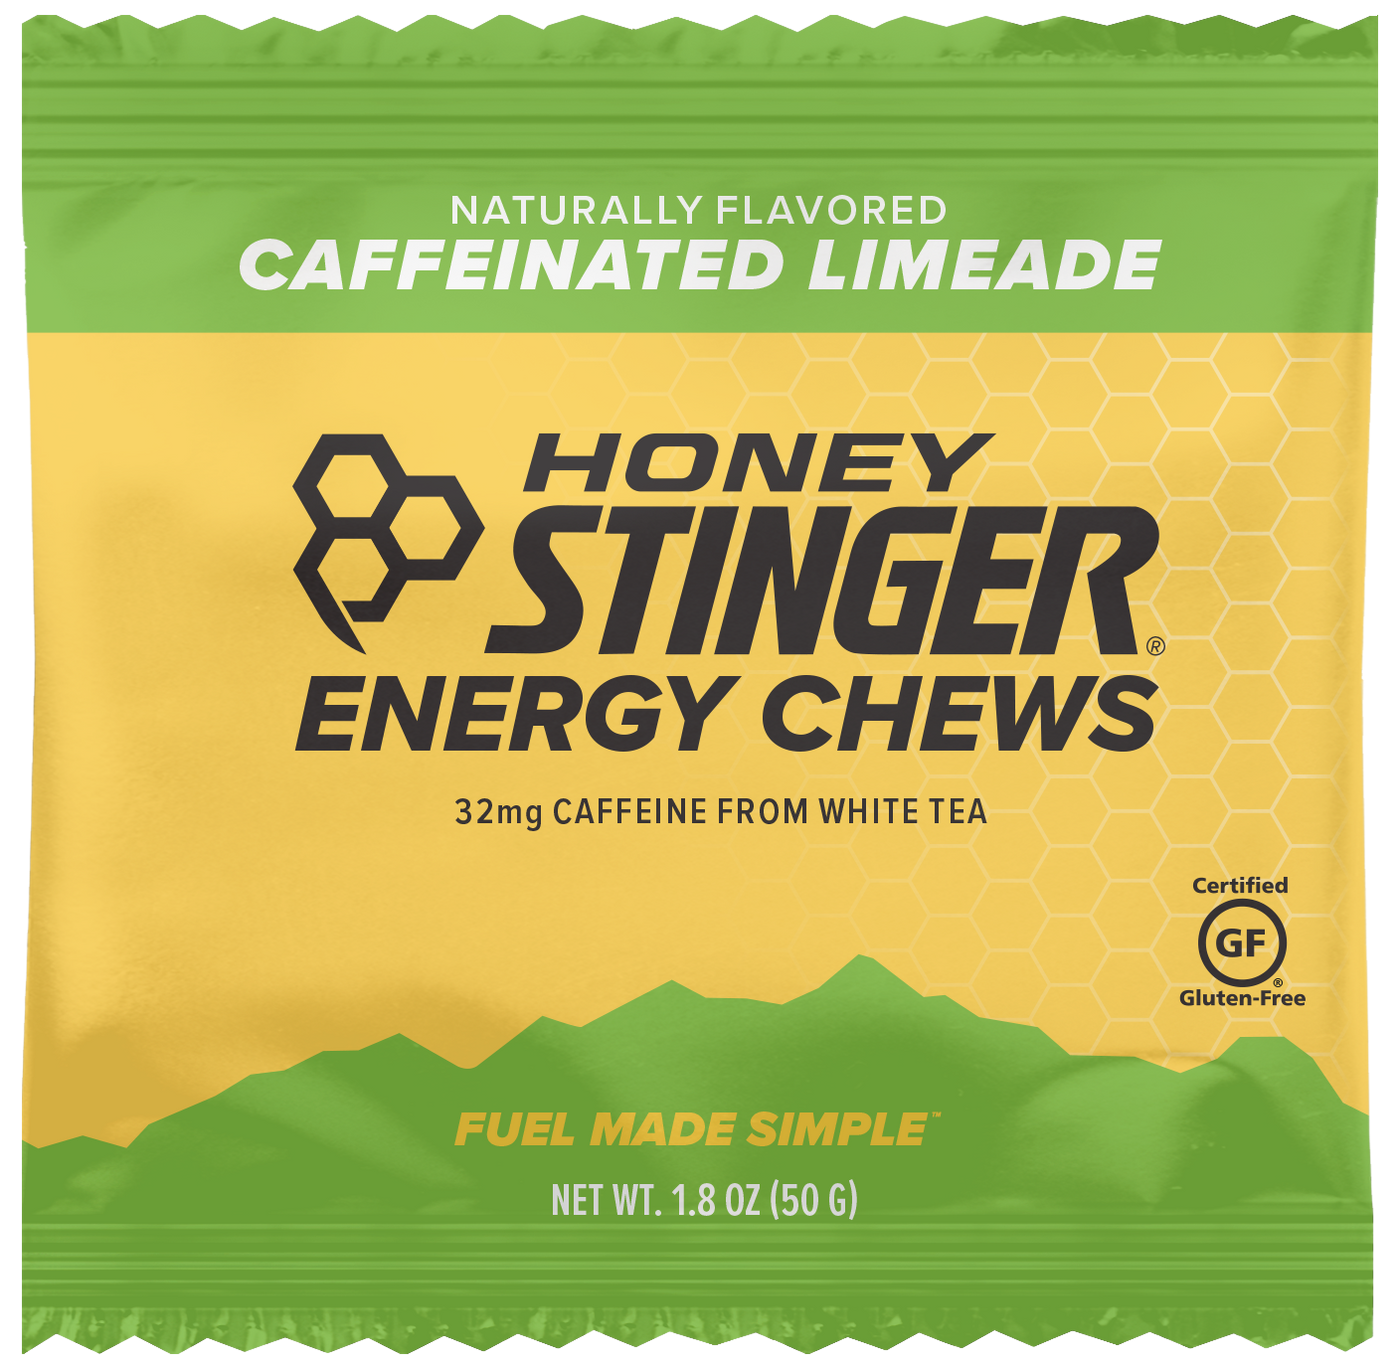 Honey Stinger Energy Chews